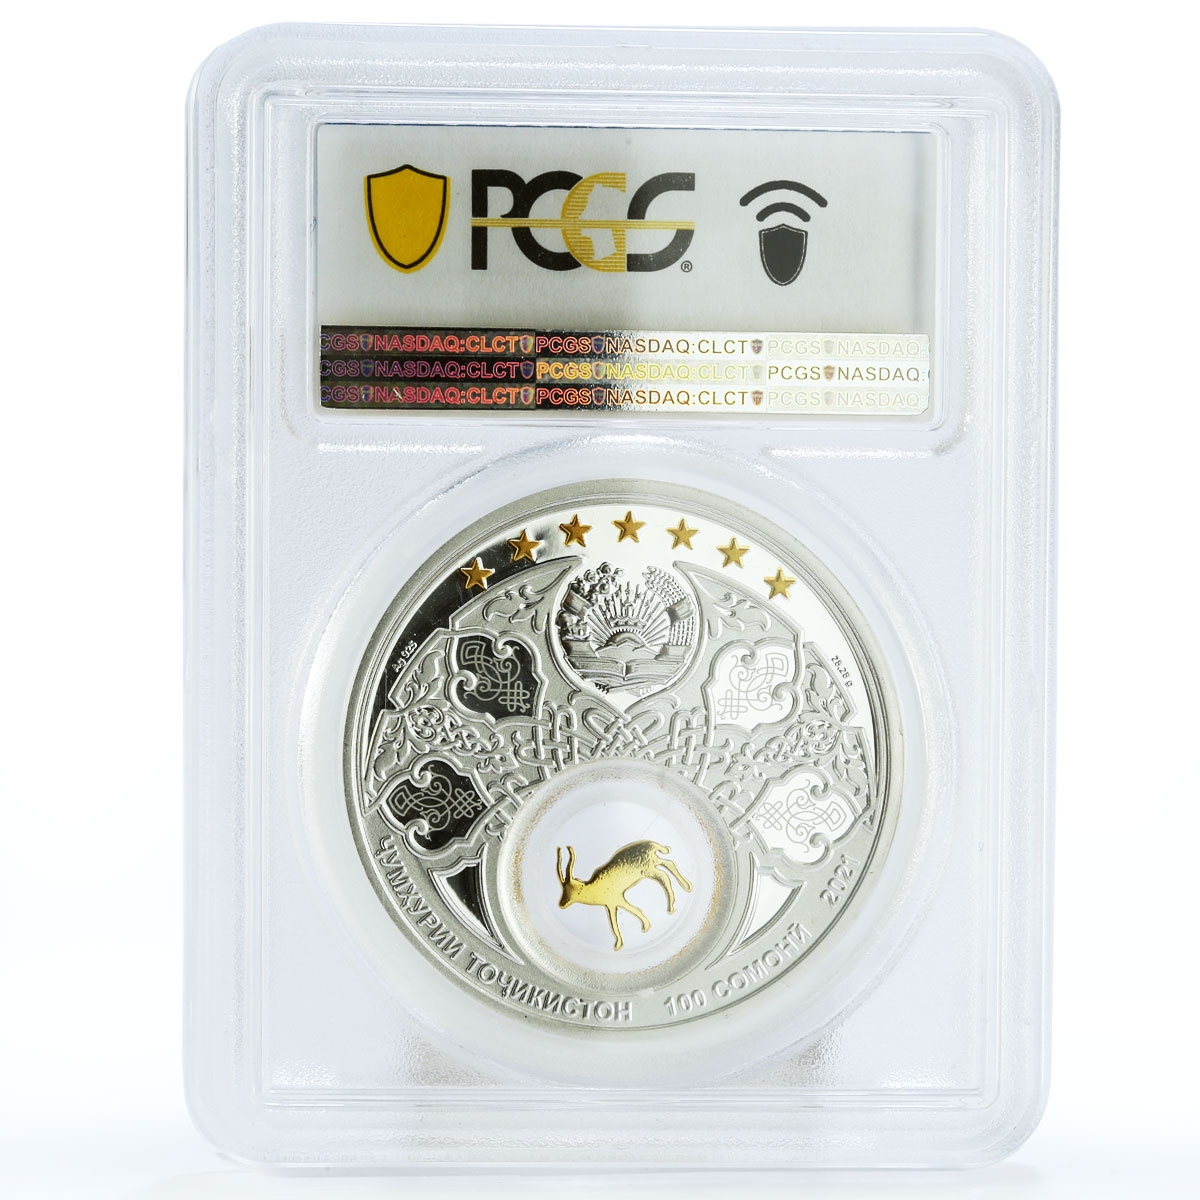 Tajikistan 100 somoni Gazella Subgutturosa Selective PR67 PCGS silver coin 2021